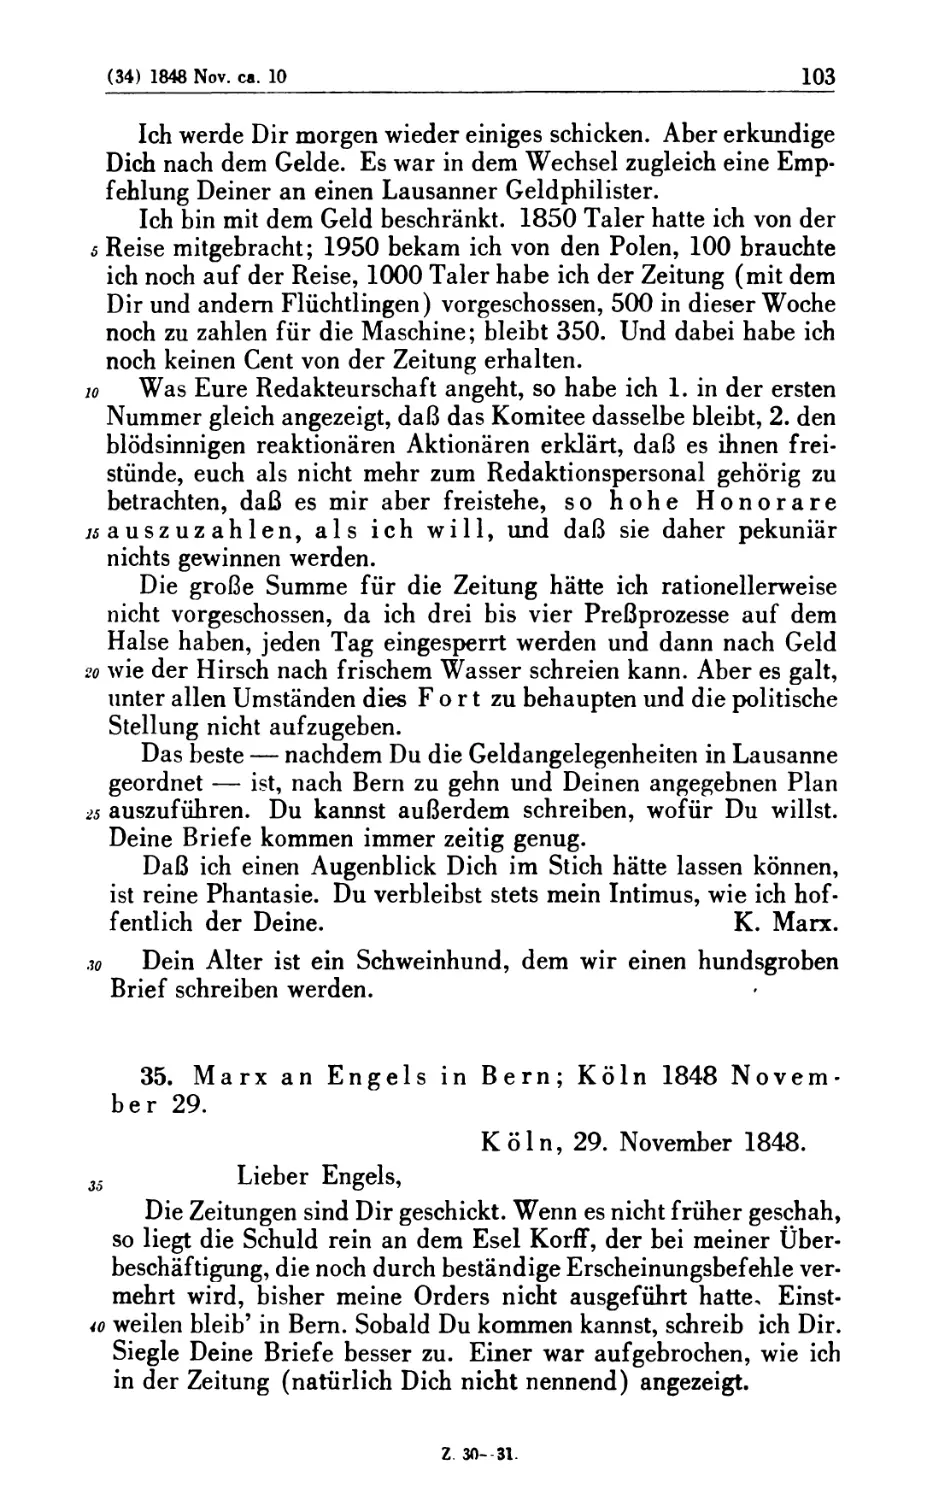 35. Marx an Engels in Bern; Köln 1848 November 29